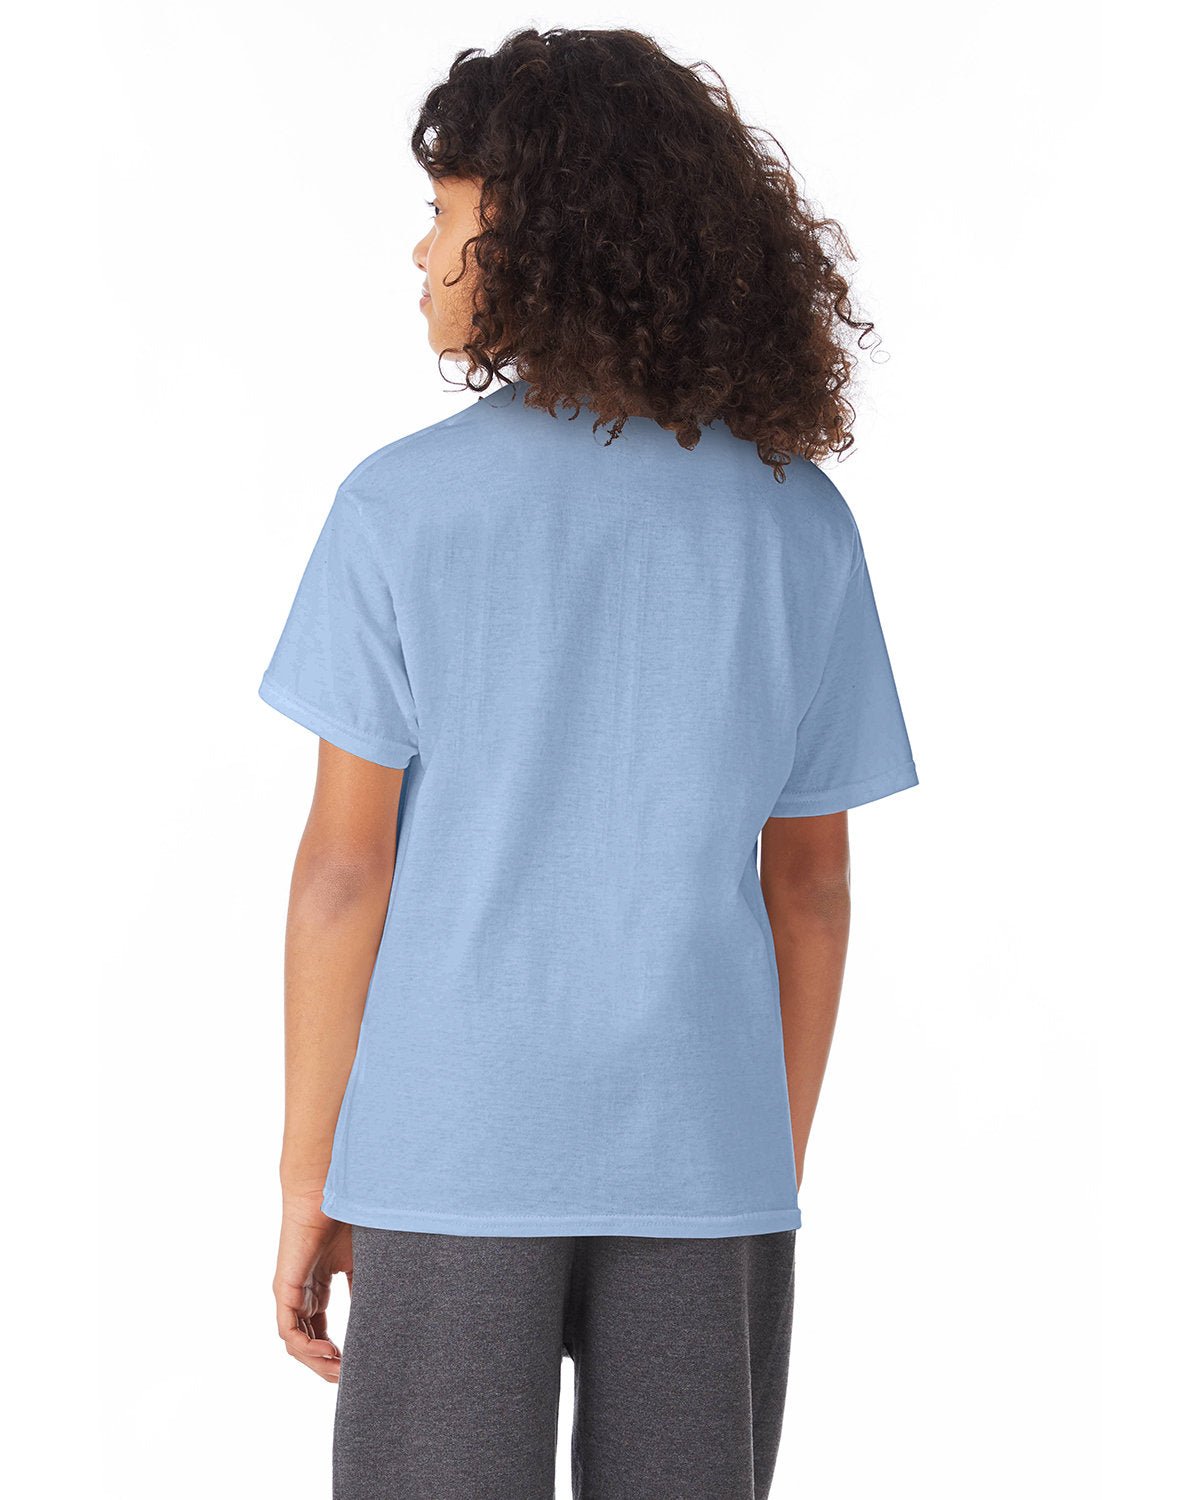 5370-Hanes-LIGHT BLUE-Hanes-T-Shirts-2